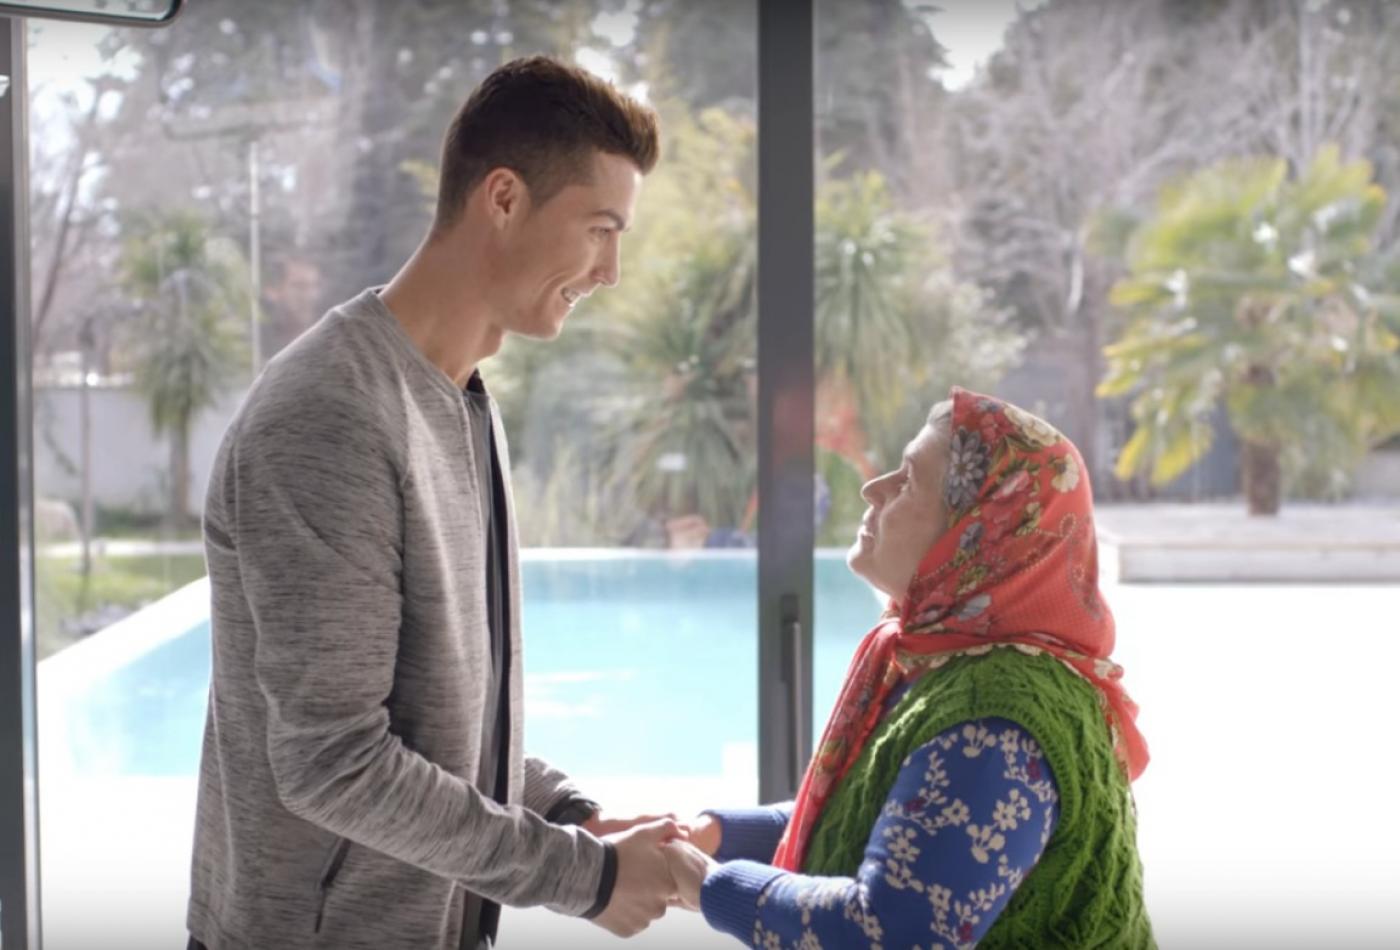 Kocak in the ad she did for Turk Telekom with Ronaldo in 2017 (Screengrab)